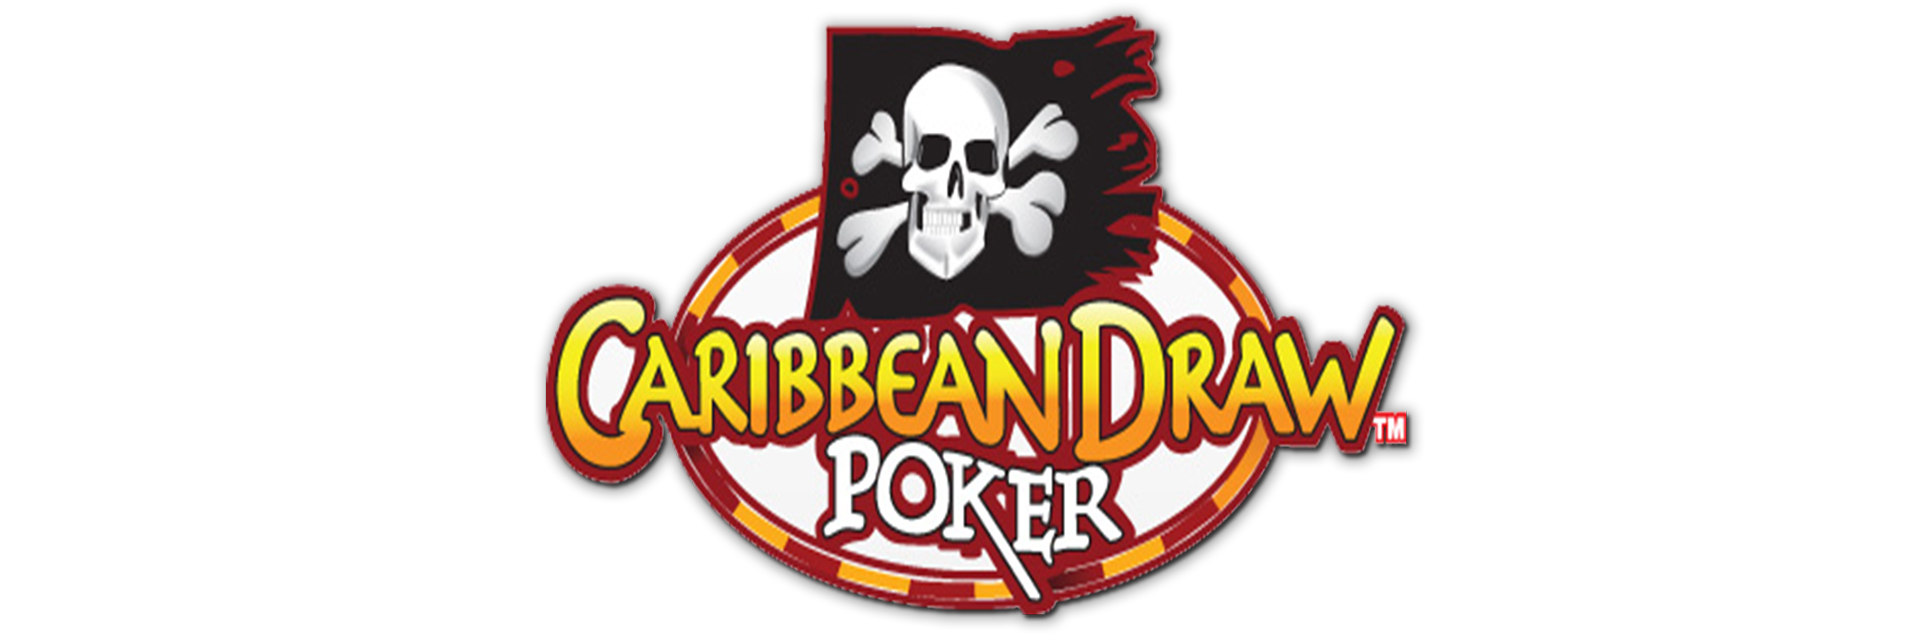 Caribbean Draw poker slot.